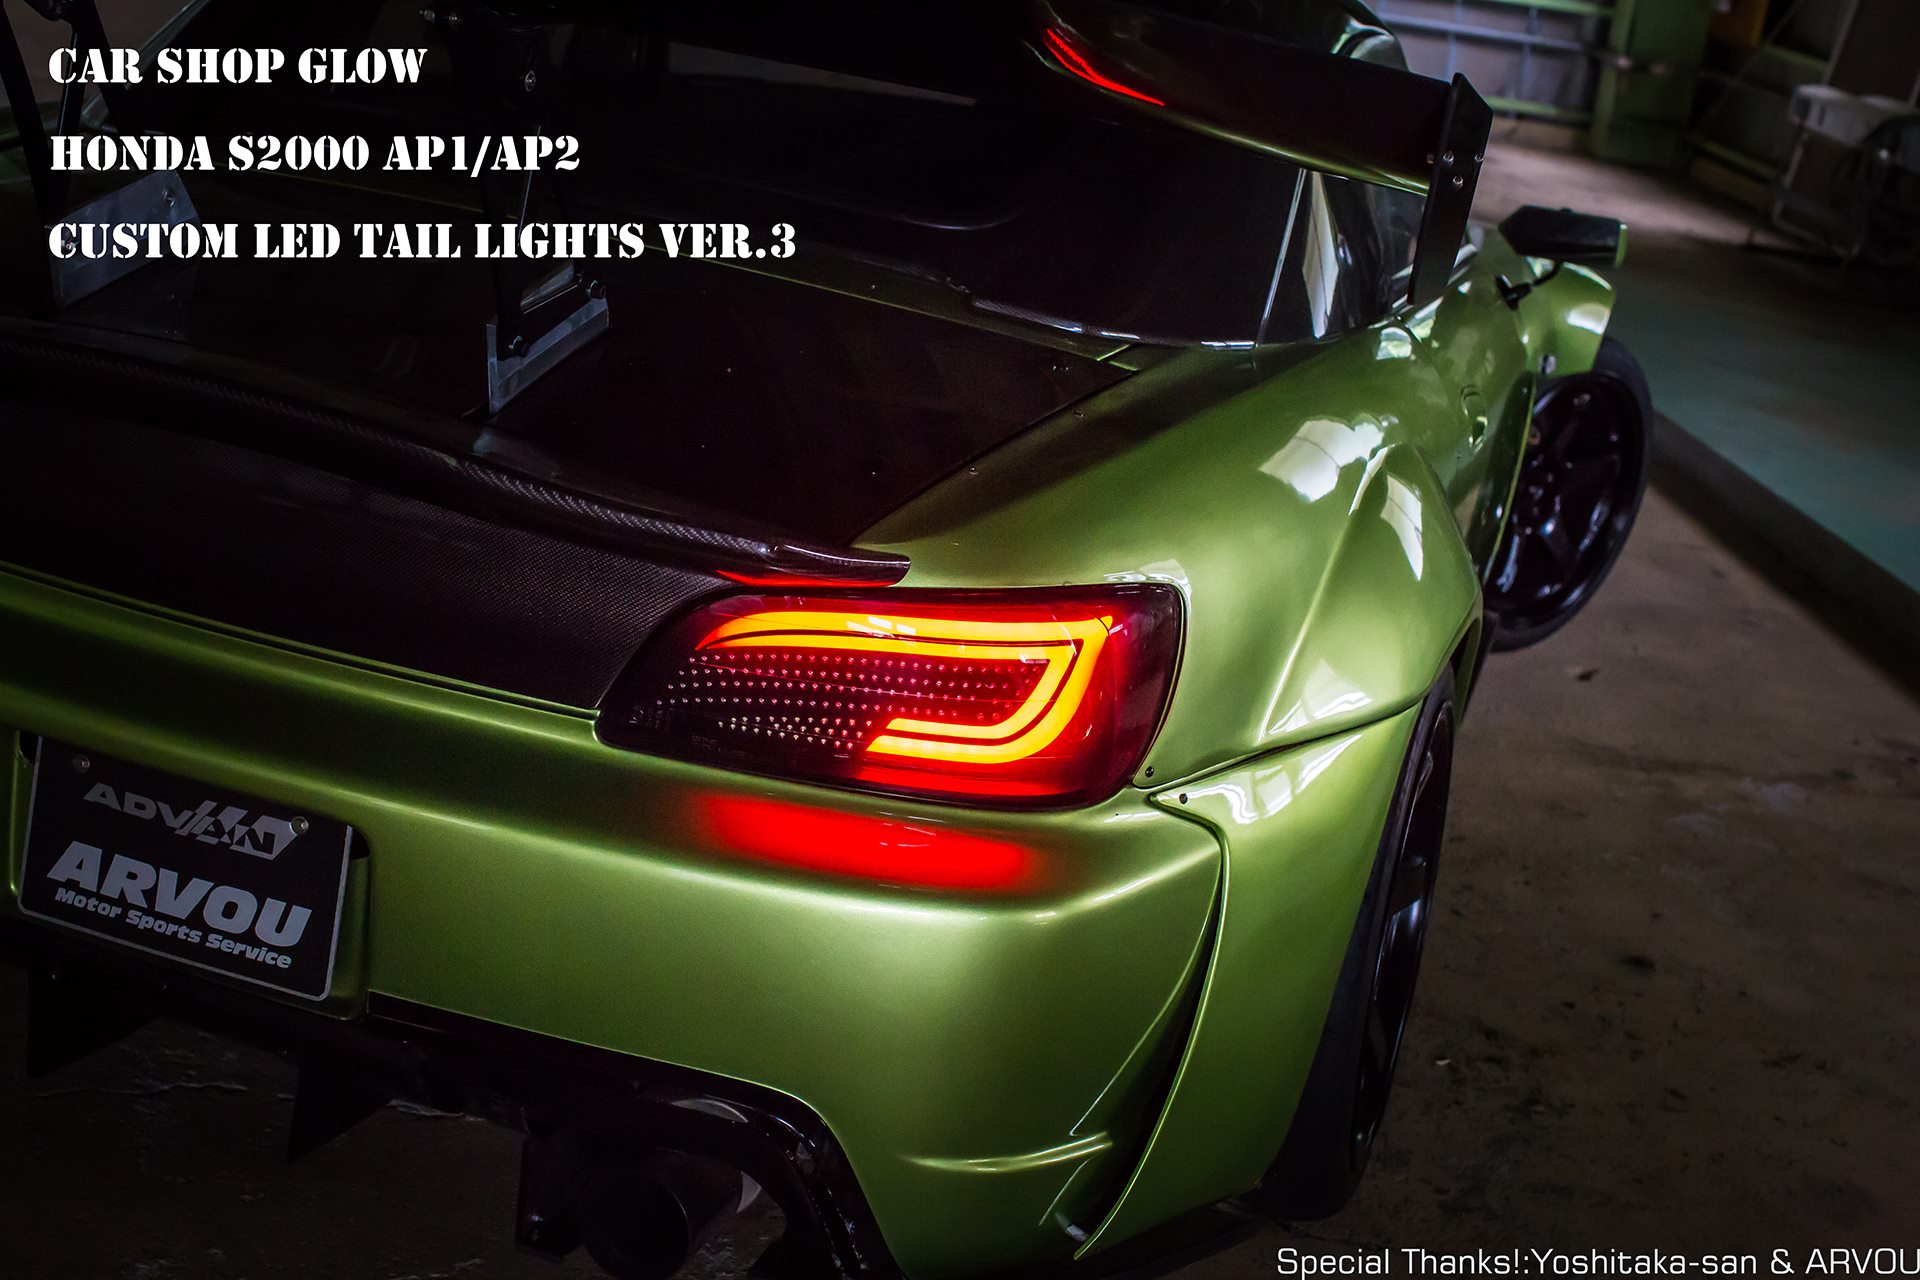 Car Shop Glow Honda S2000 AP1/AP2 Custom LED tail lights Ver.3. (smoked